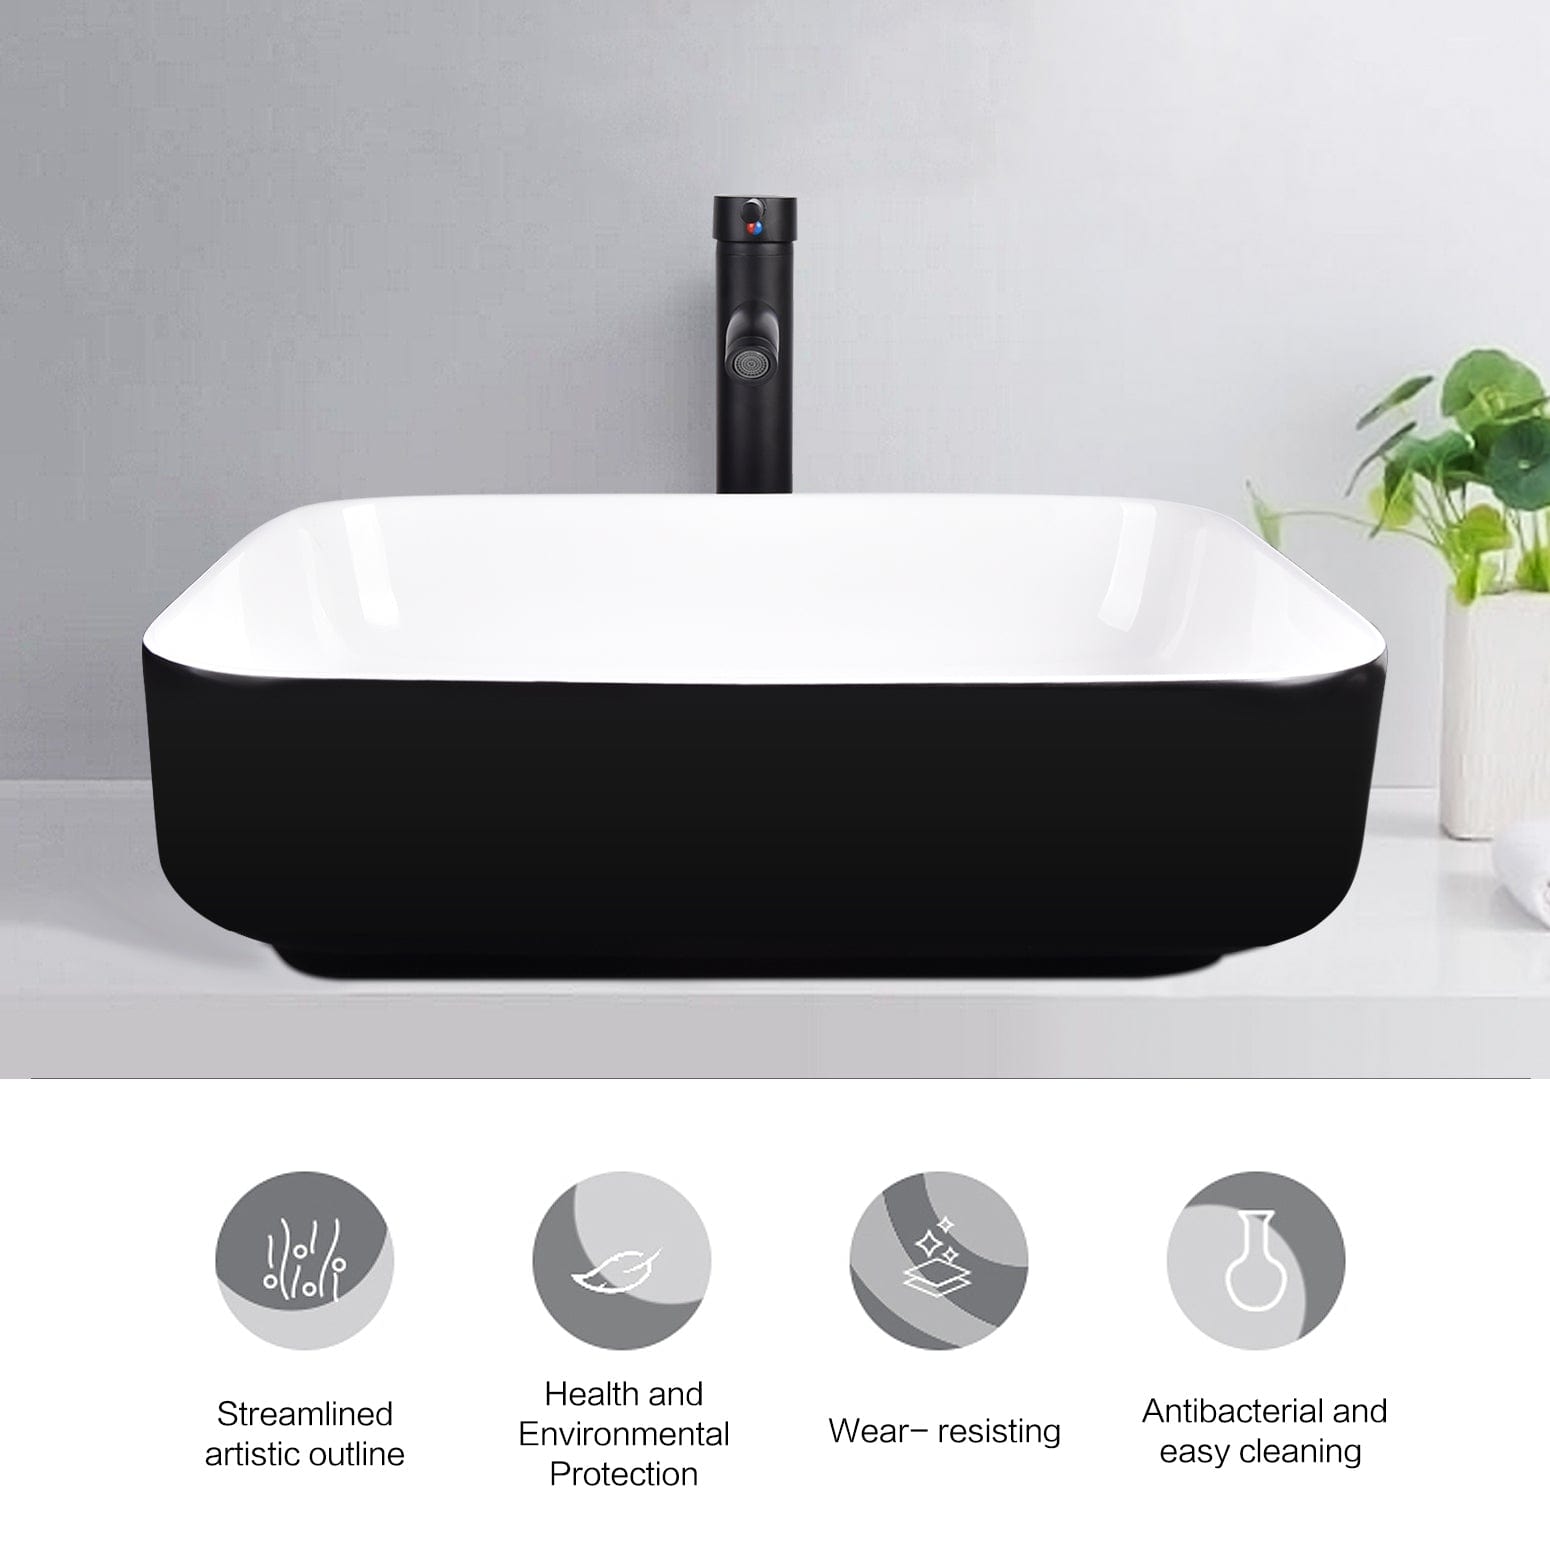 Black ceramic sink features display